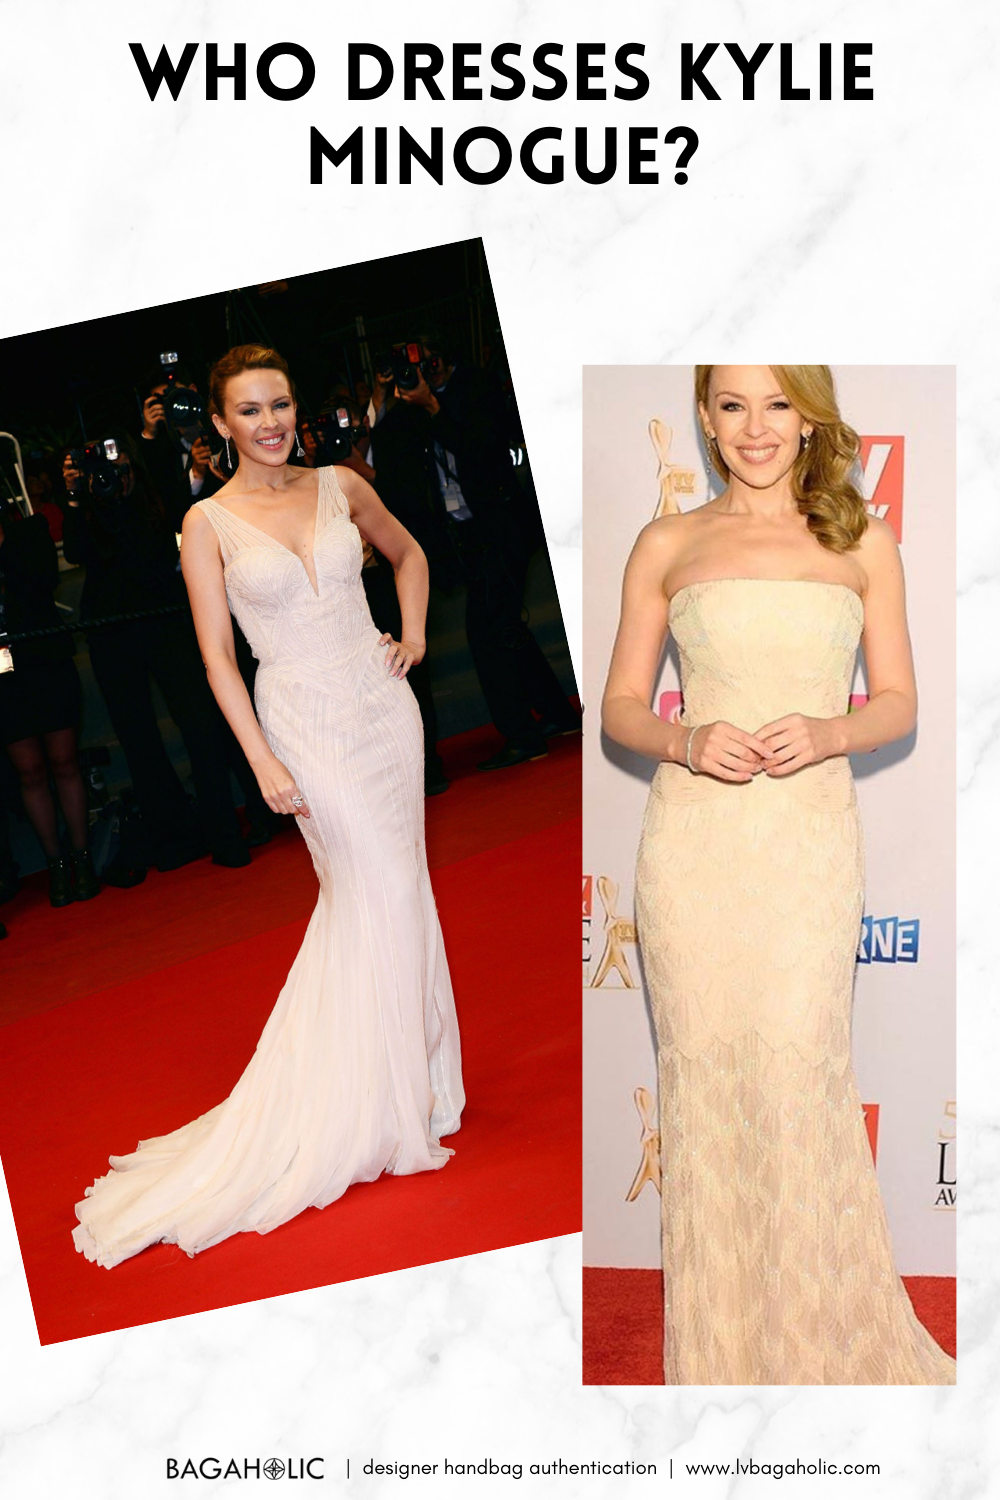 L'eredità di Roberto Cavalliwhi veste Kylie Minogue?